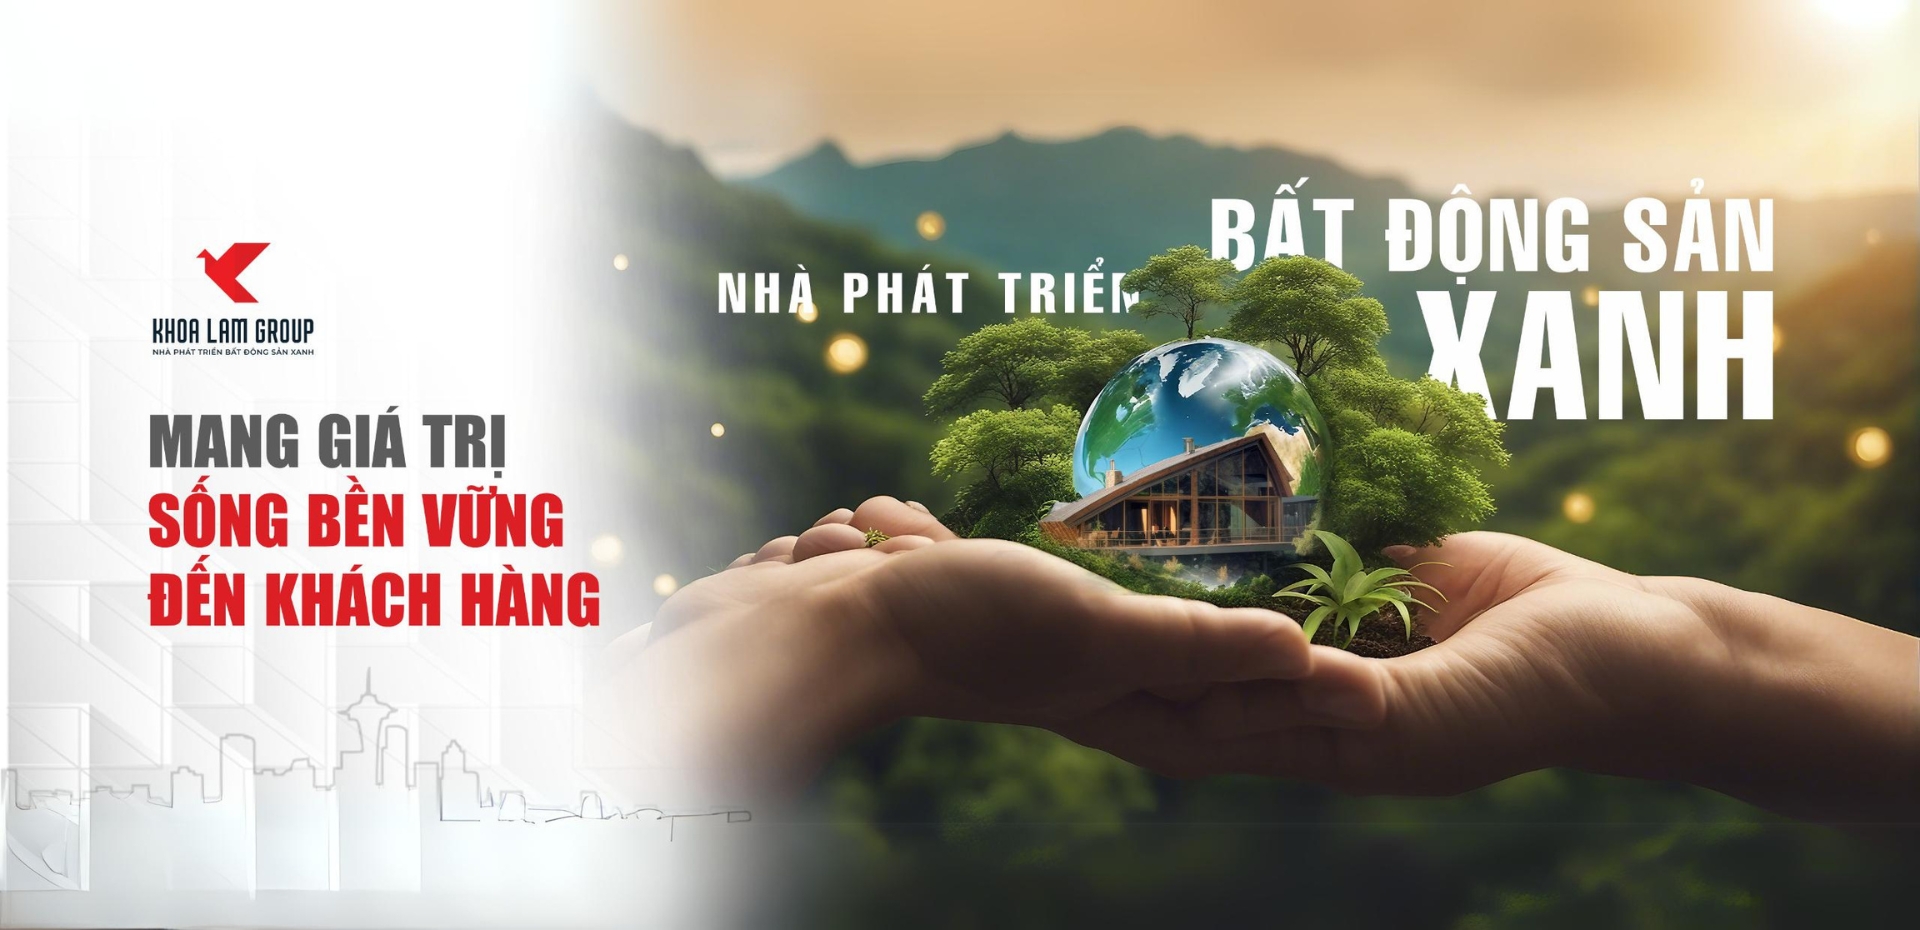 Khoa Lam Group Nha Phat Trien Bat Dong San Xanh (1)